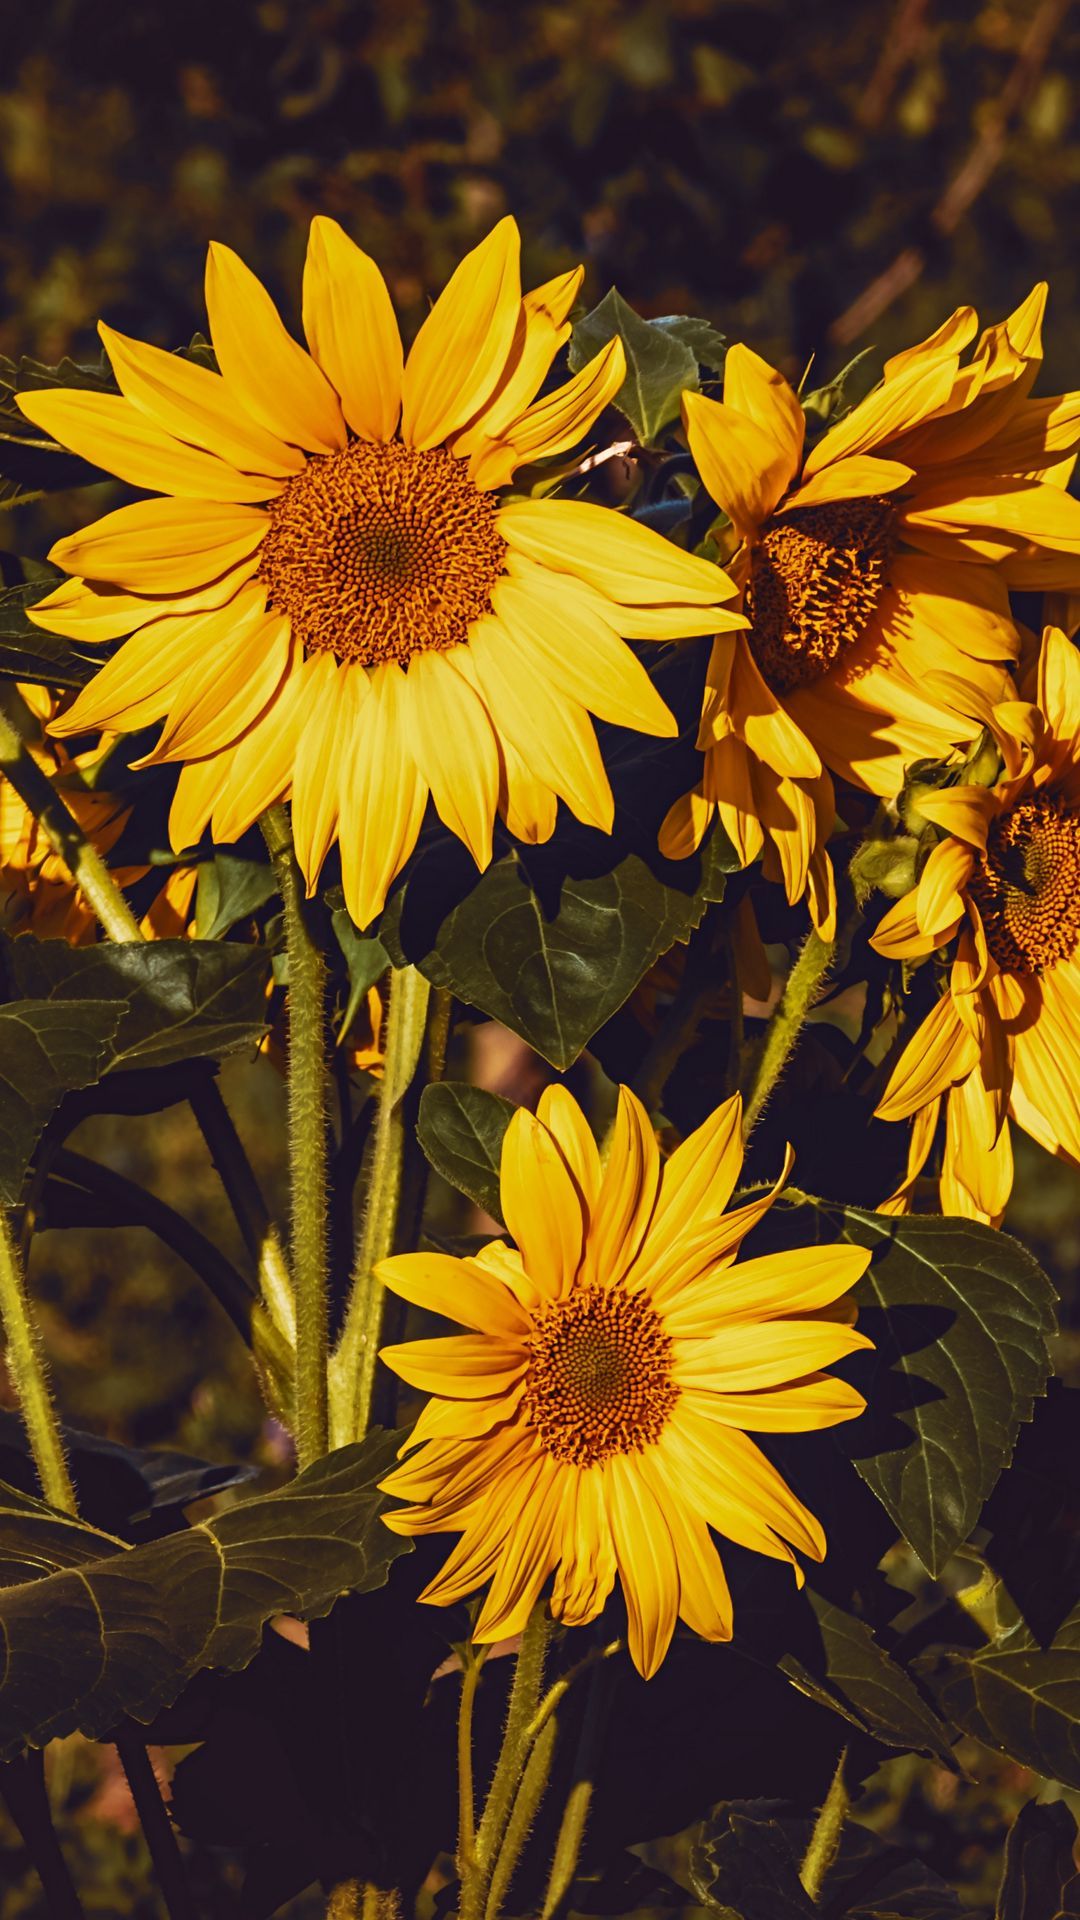 Download wallpaper 1080x1920 sunflower, flowers, summer, yellow samsung galaxy s s note, sony xperia z, z z z htc one, lenovo vibe HD background